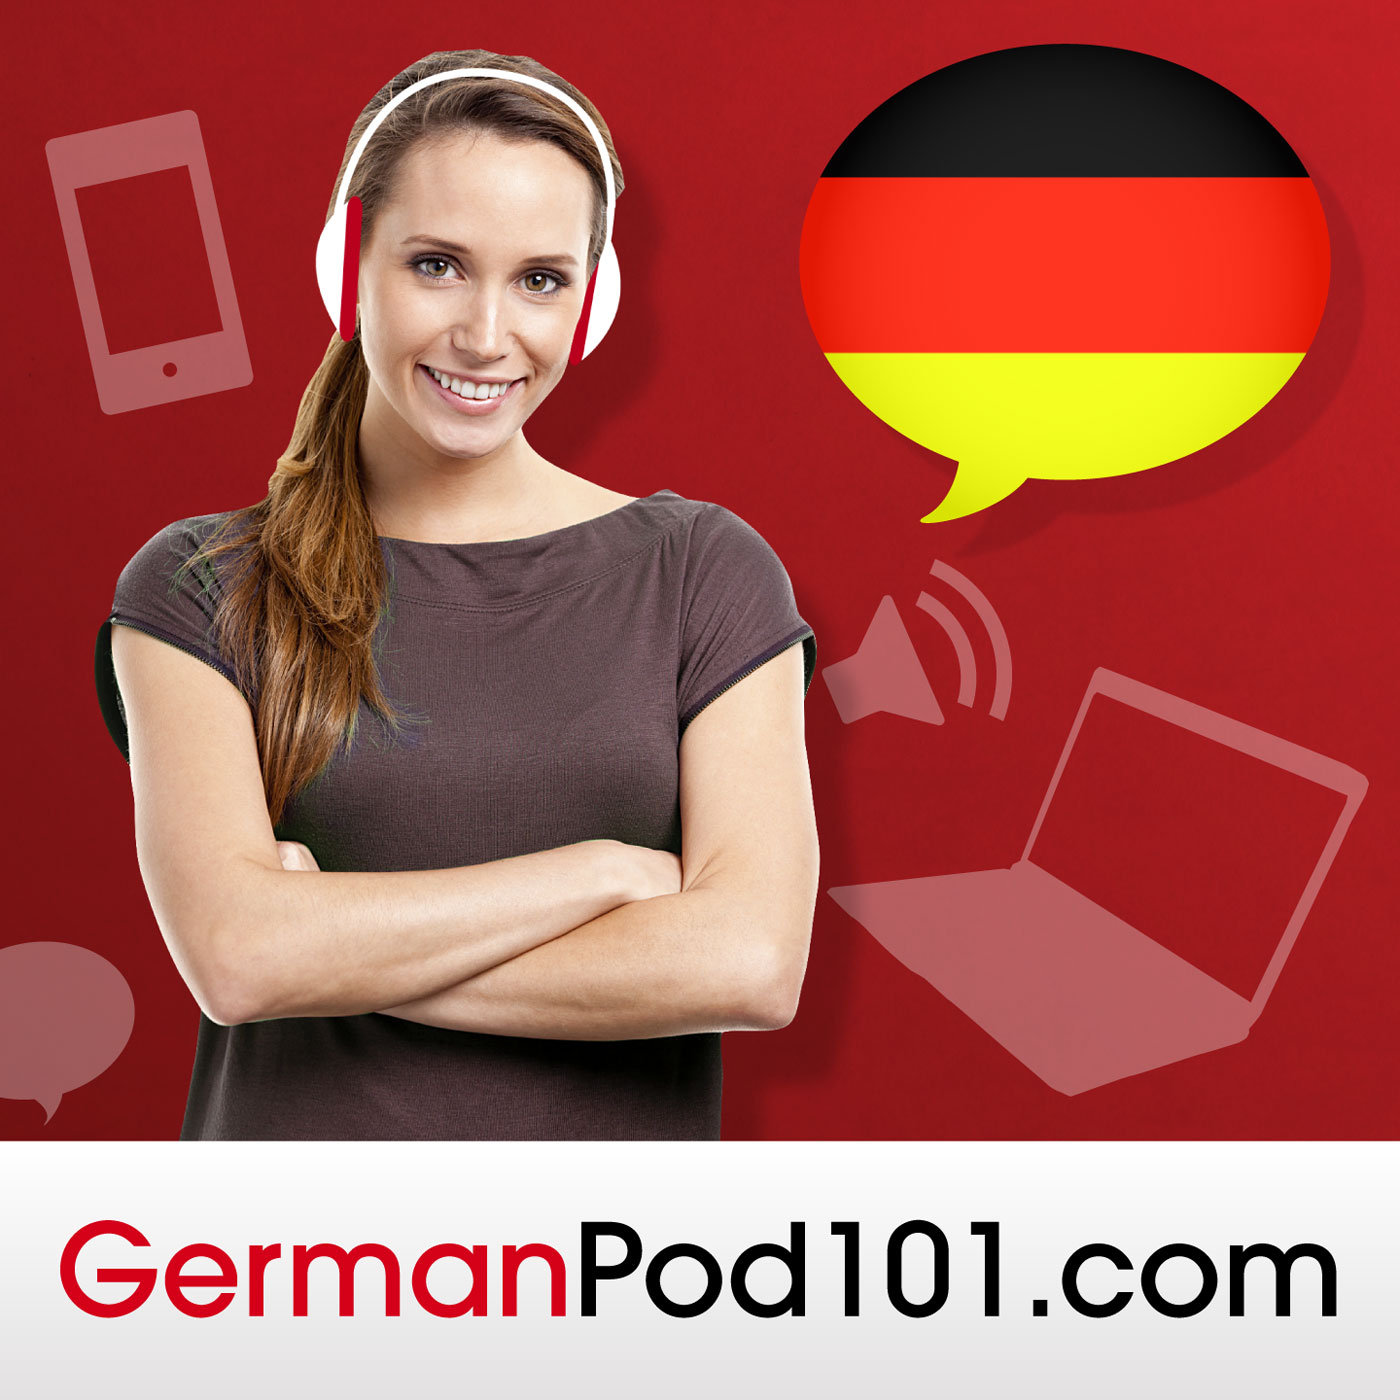 Learn German | GermanPod101.com | Listen via Stitcher Radio On Demand